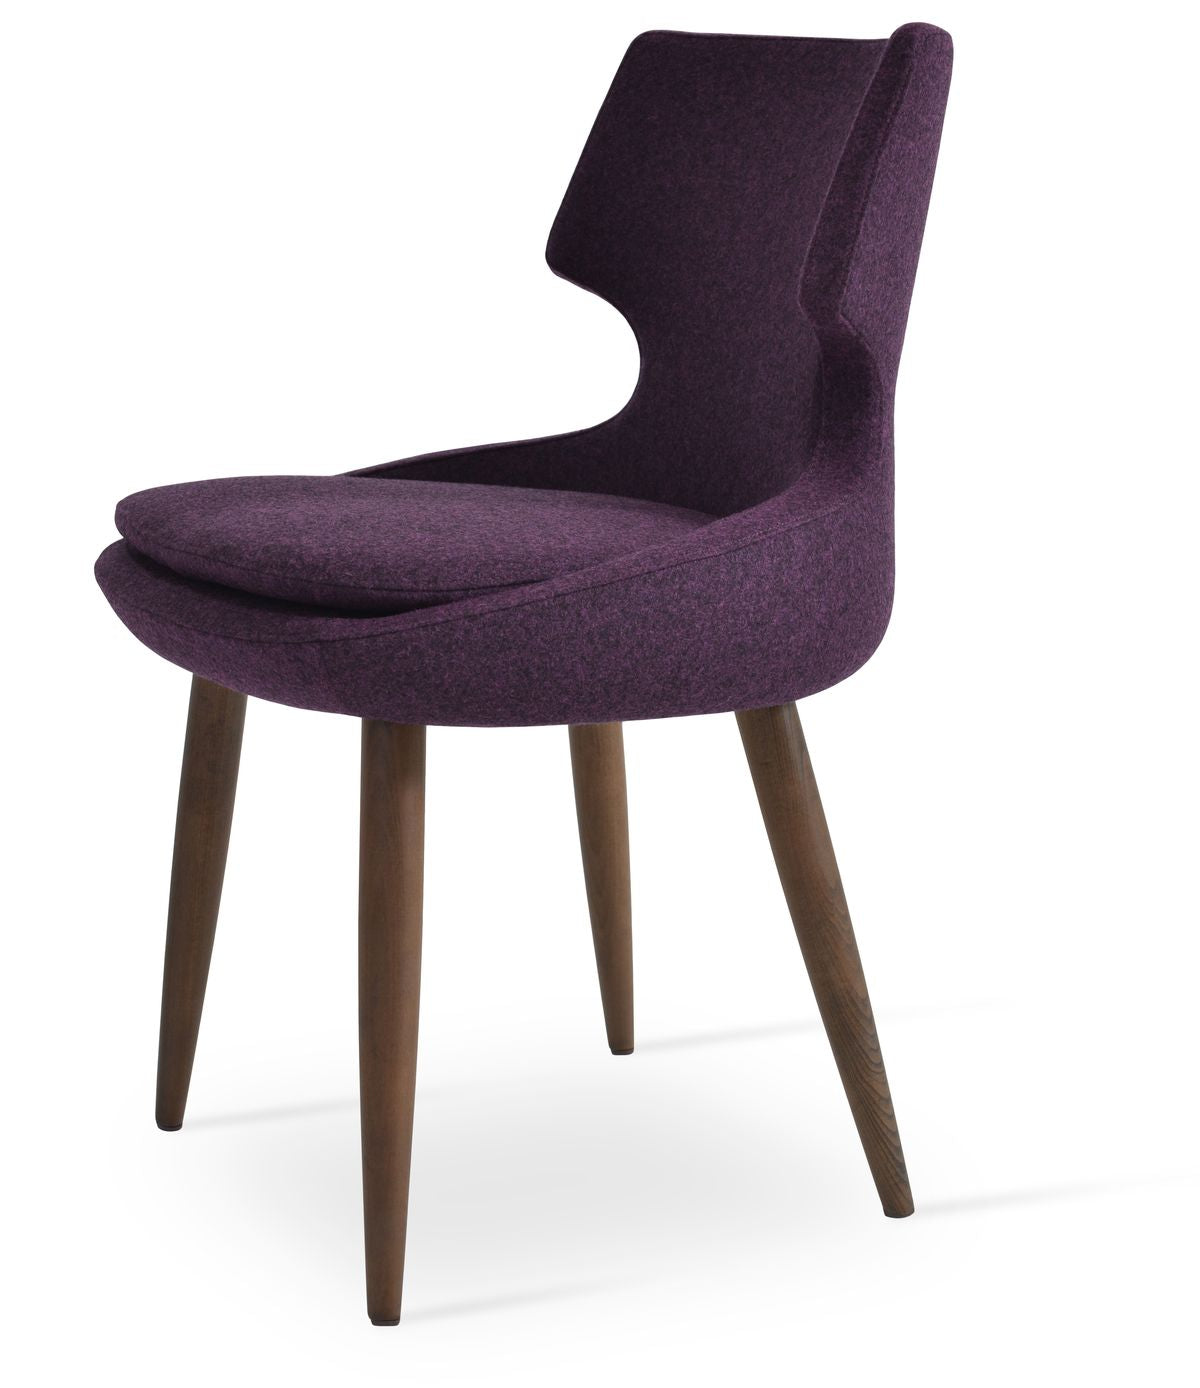 sohoConcept Patara Wood Dining Chair Fabric